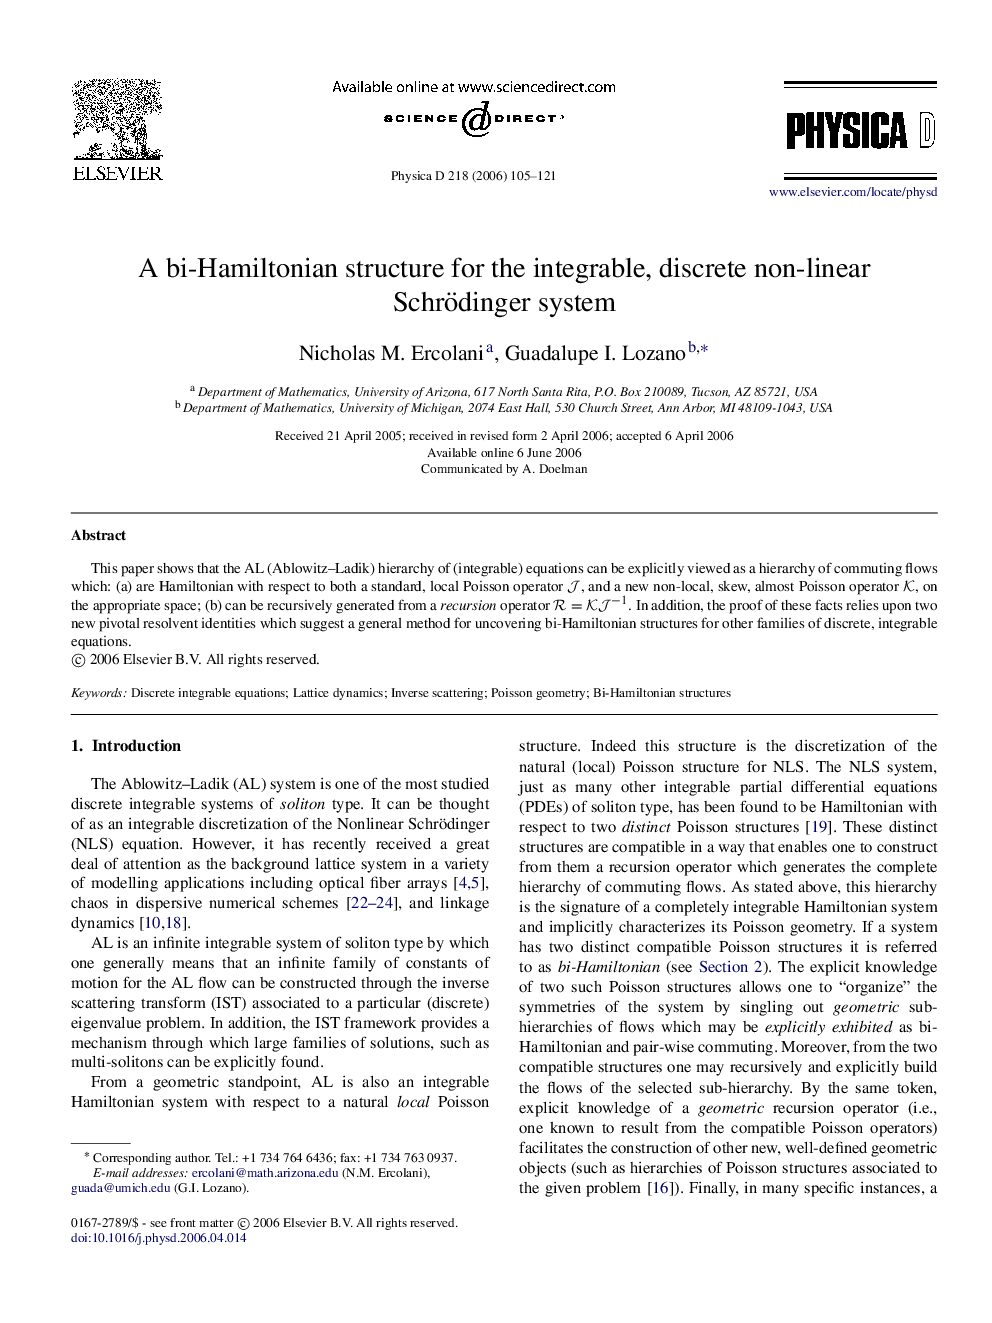 A bi-Hamiltonian structure for the integrable, discrete non-linear Schrödinger system